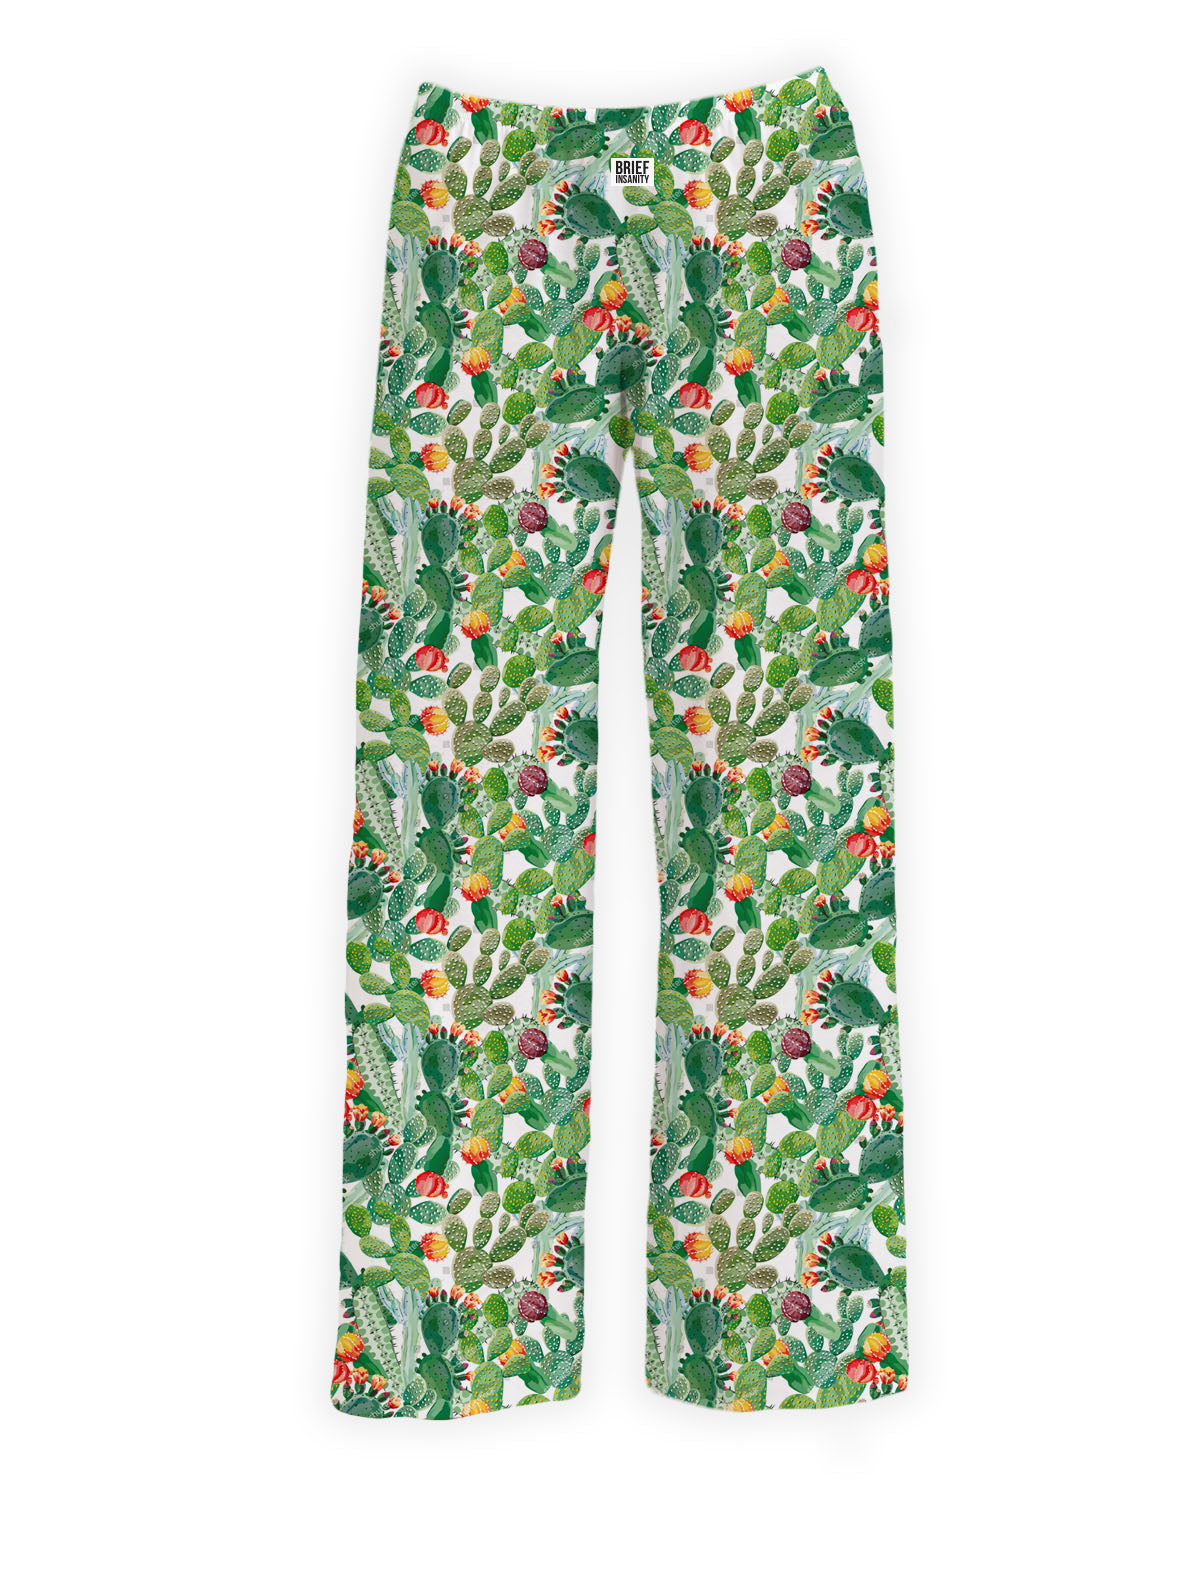 BRIEF INSANITY Cactus Floral Pajama Lounge Pants